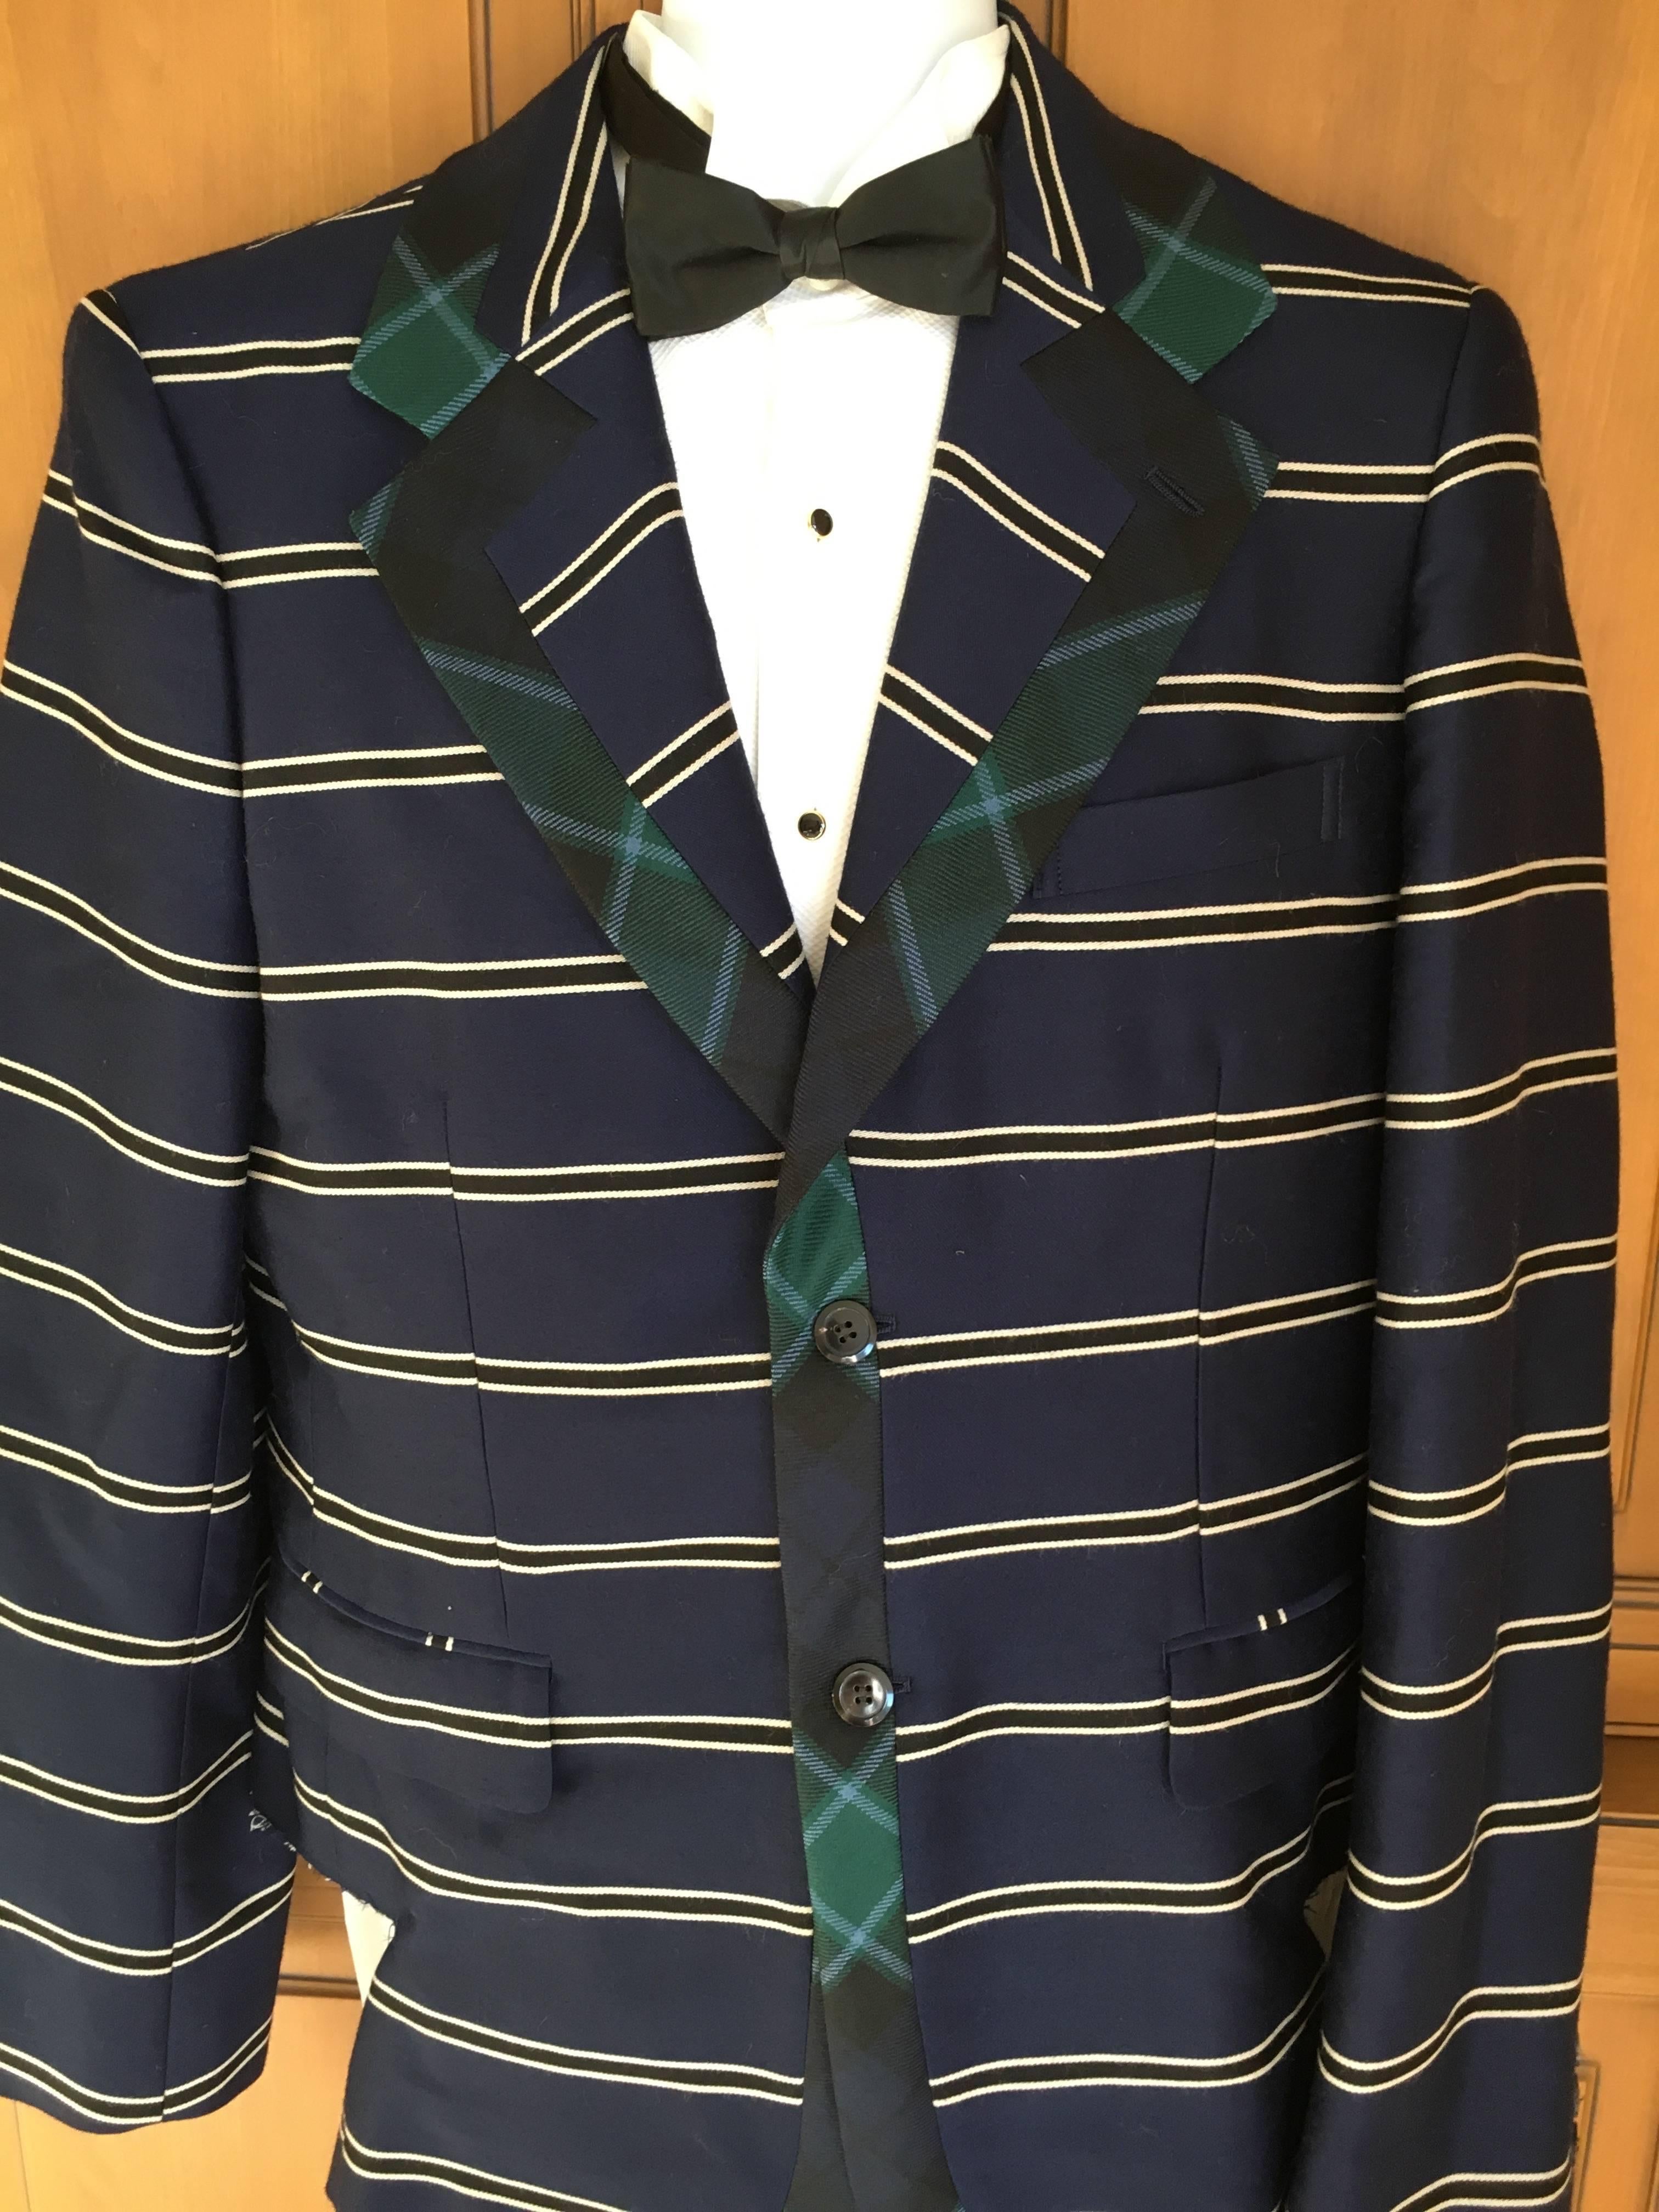 Charming stripe blazer with tartan trim from Comme des Garcons Homme Plus.
Size L
Chest 46